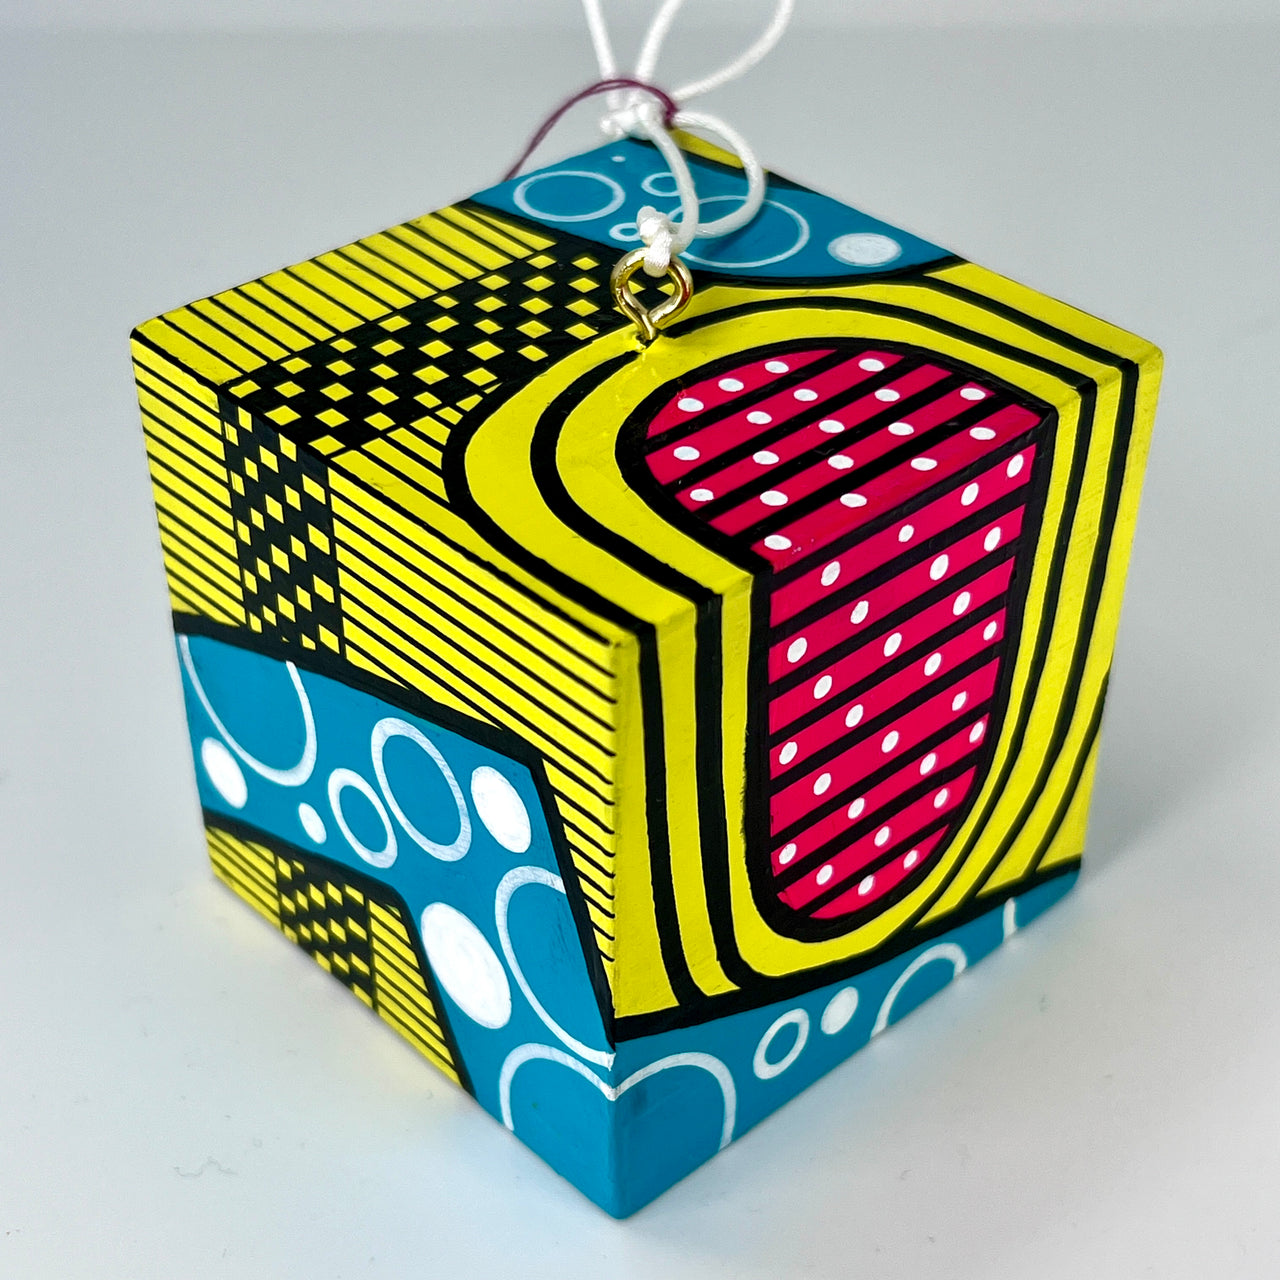 #18 - 3D Cube Art - 2.25" cube